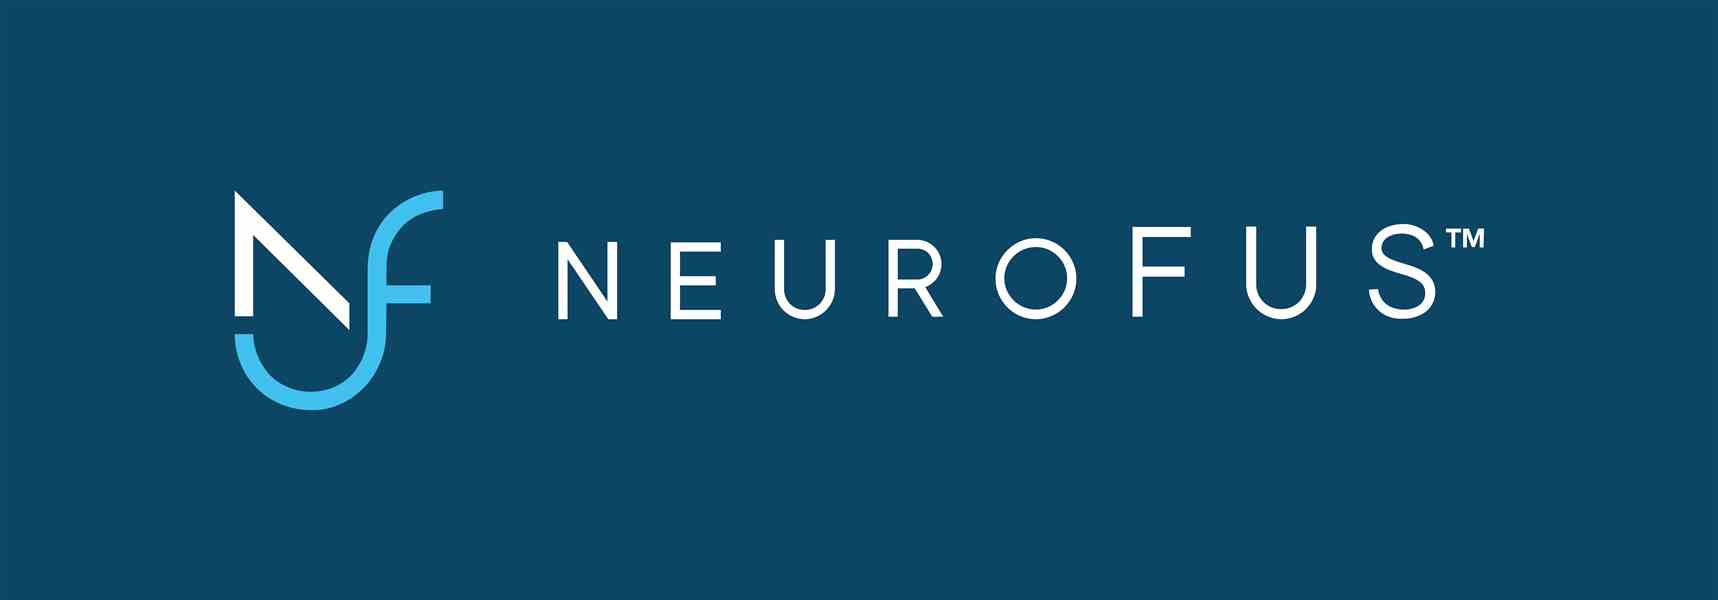 NeuroFUS Header-01.jpg